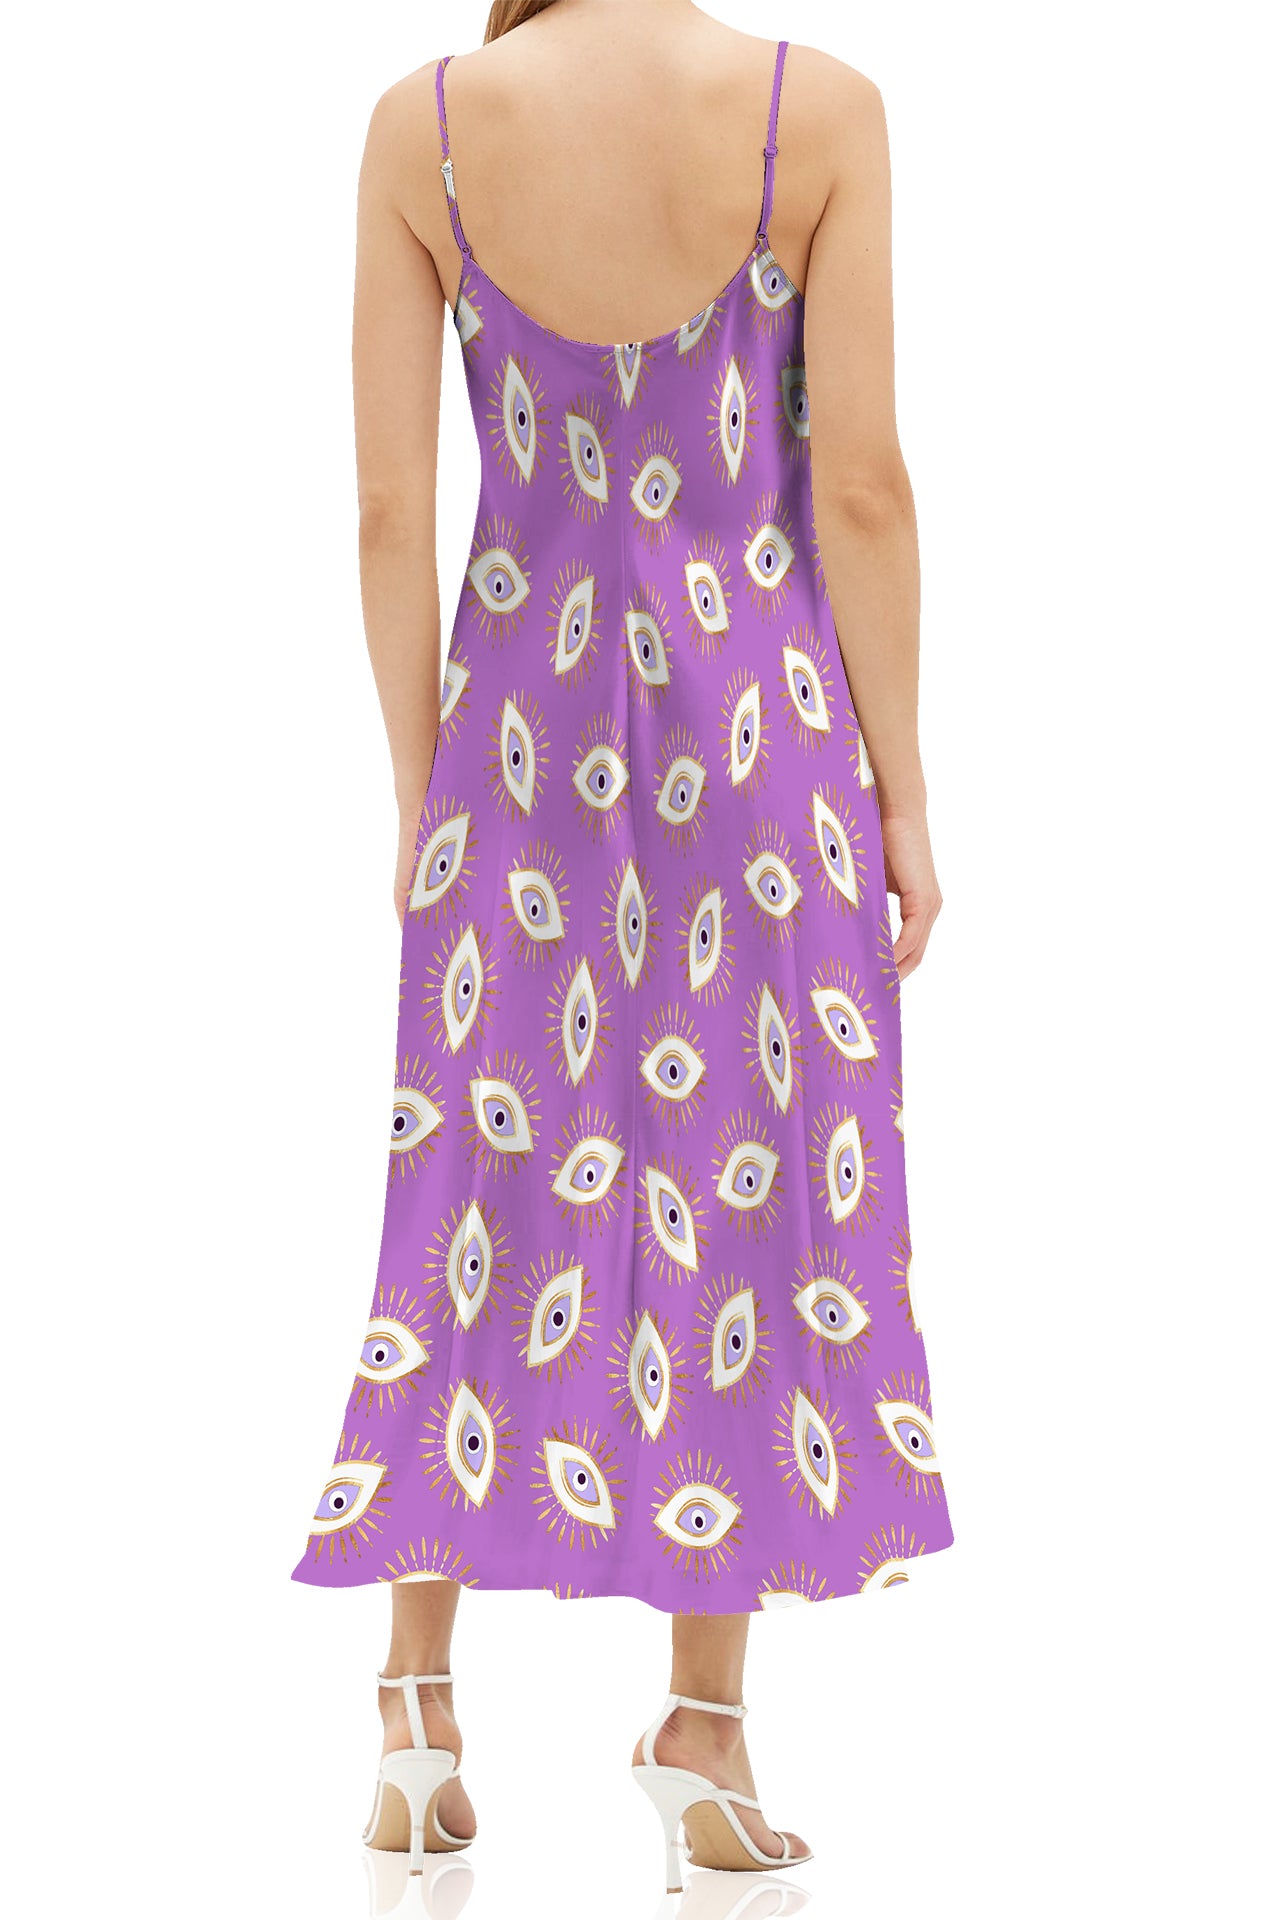 "purple cami dress" "evil eye print dress" "camisole midi dress" "Kyle X Shahida"